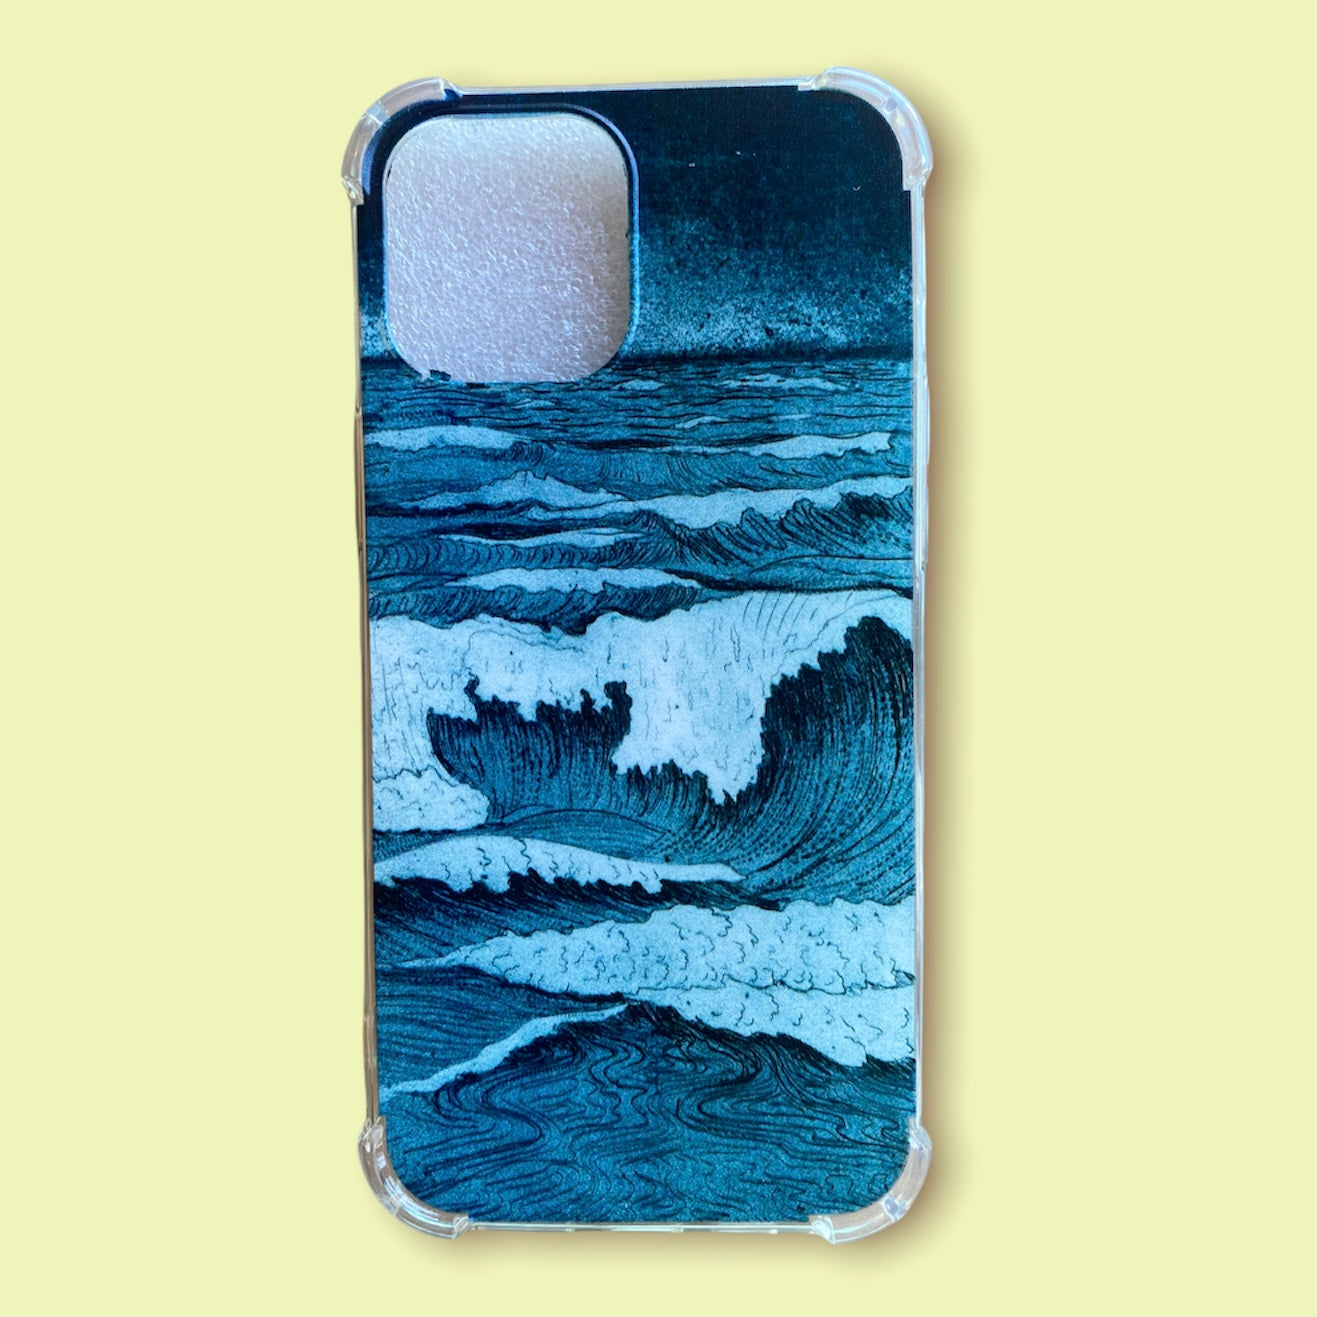 Japanese Waves iPhone case